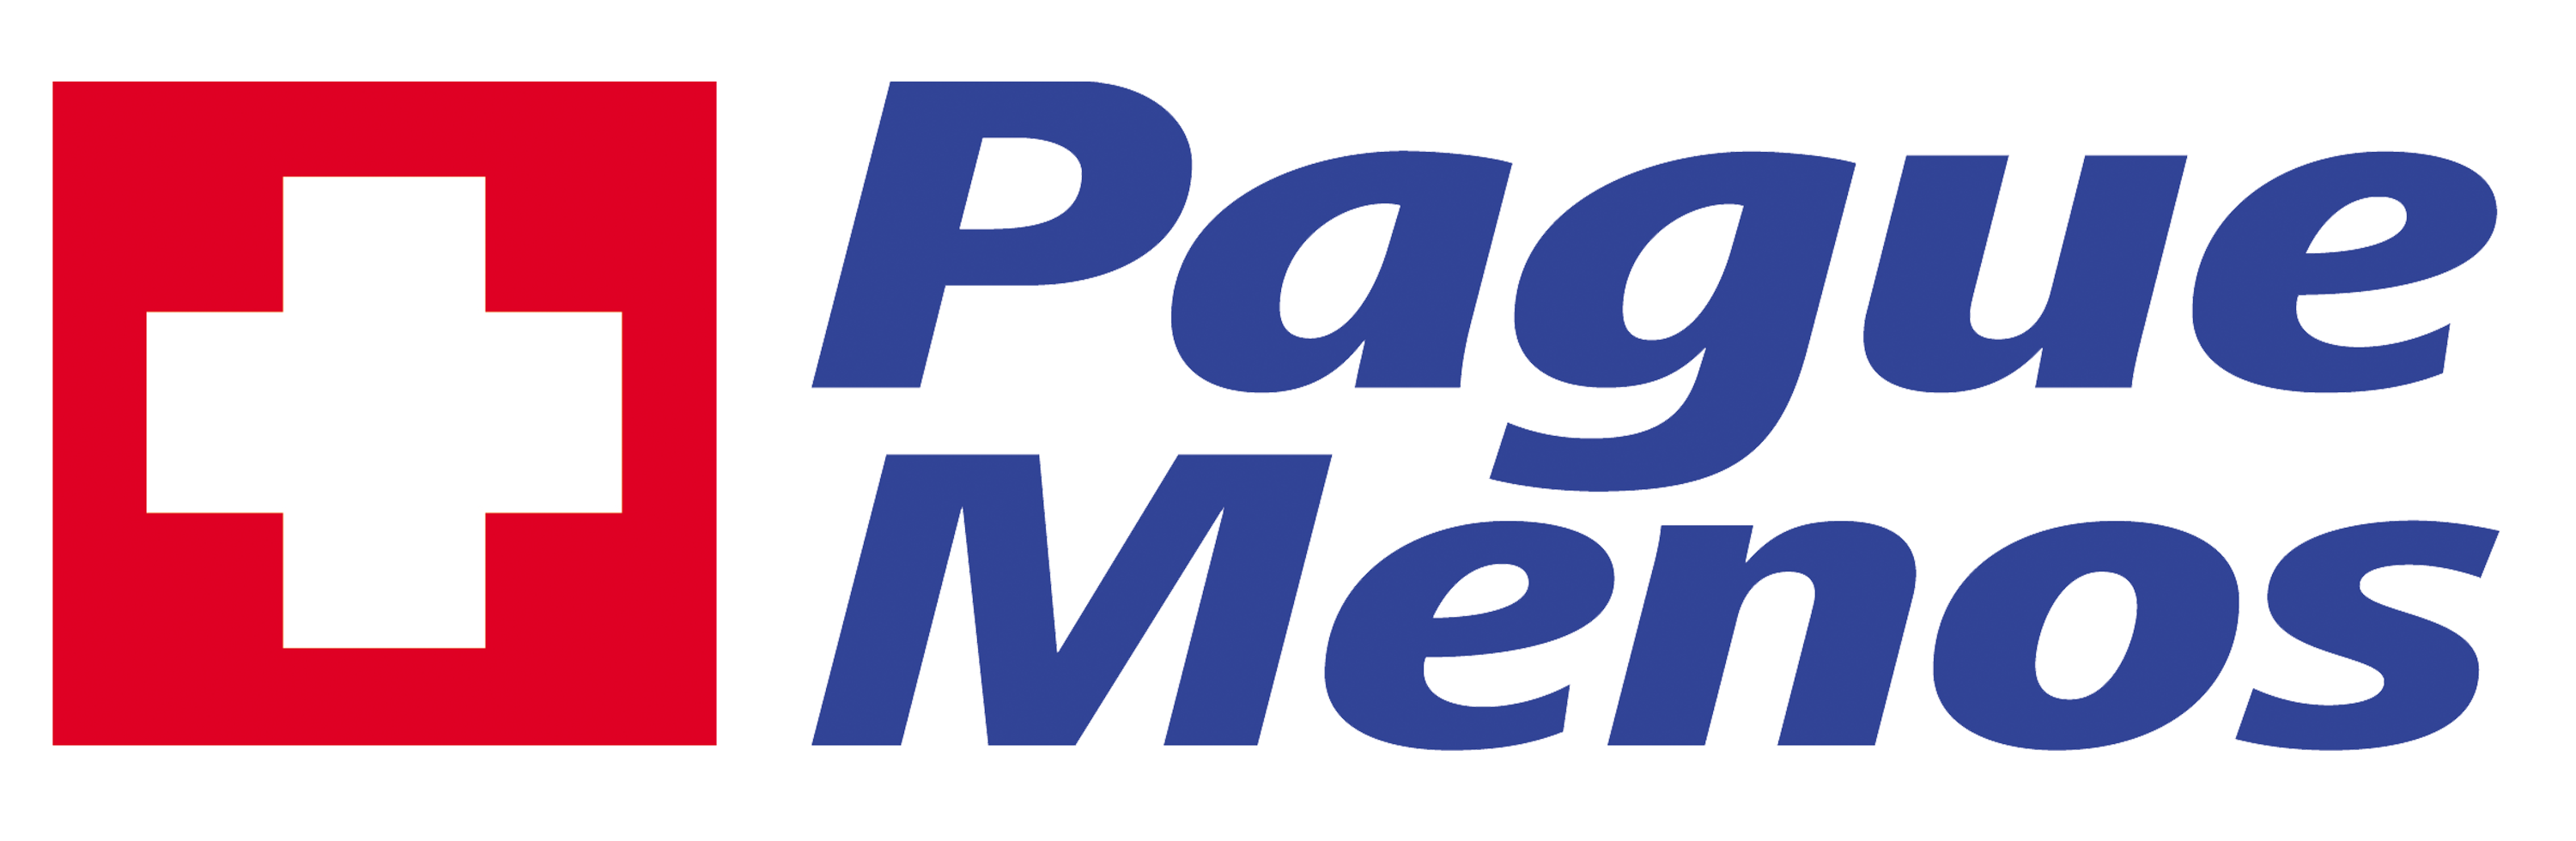 Farmacia Pague Menos - Itapecuru - MA